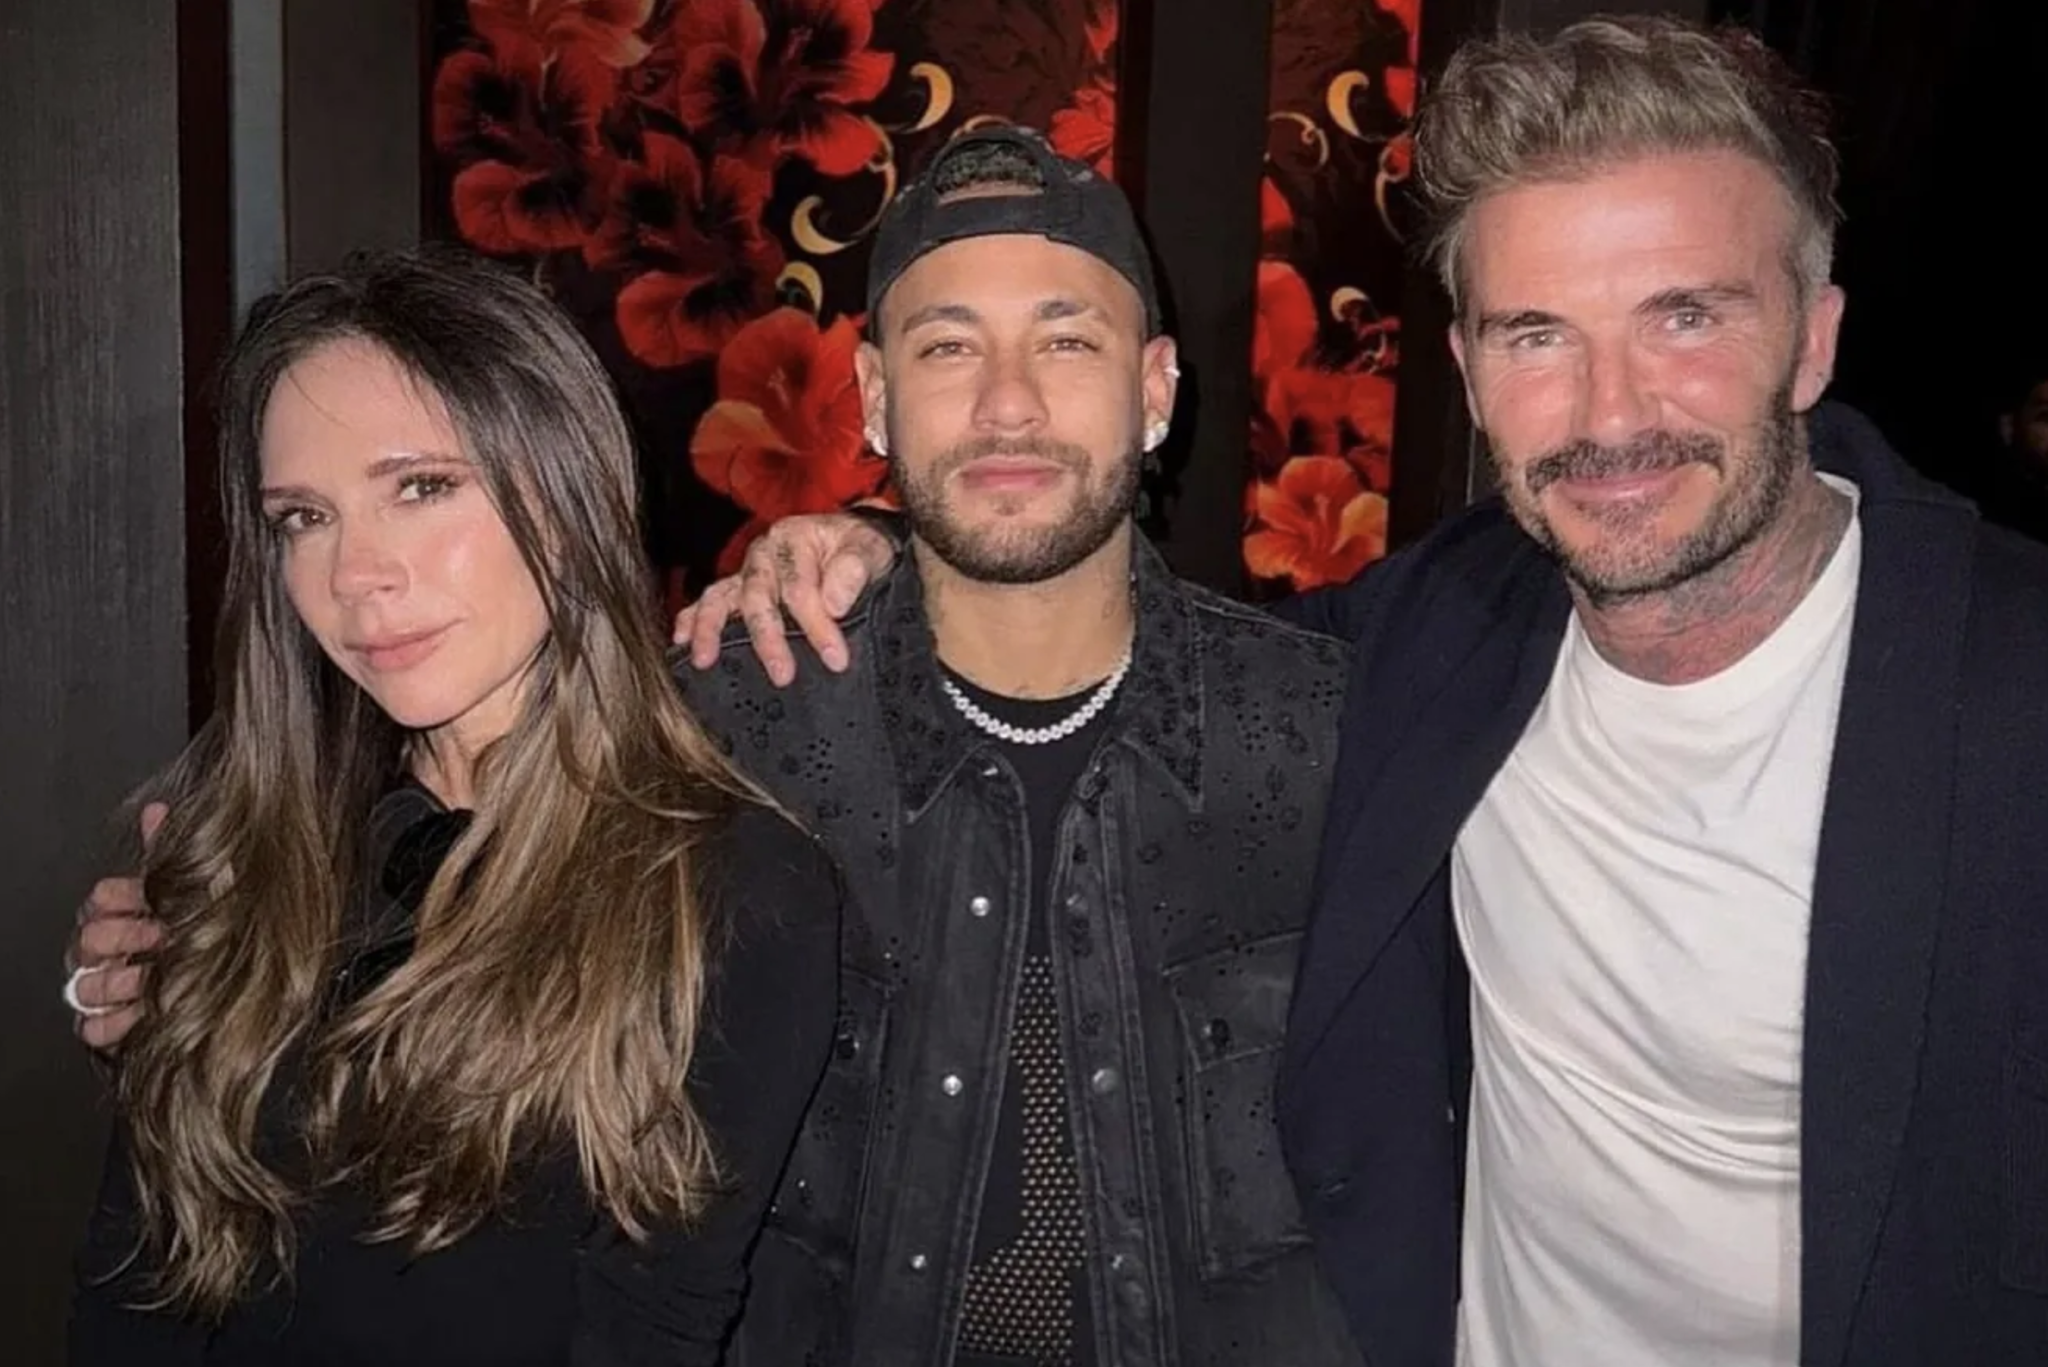 Victoria Beckham, Neymar and David Beckham